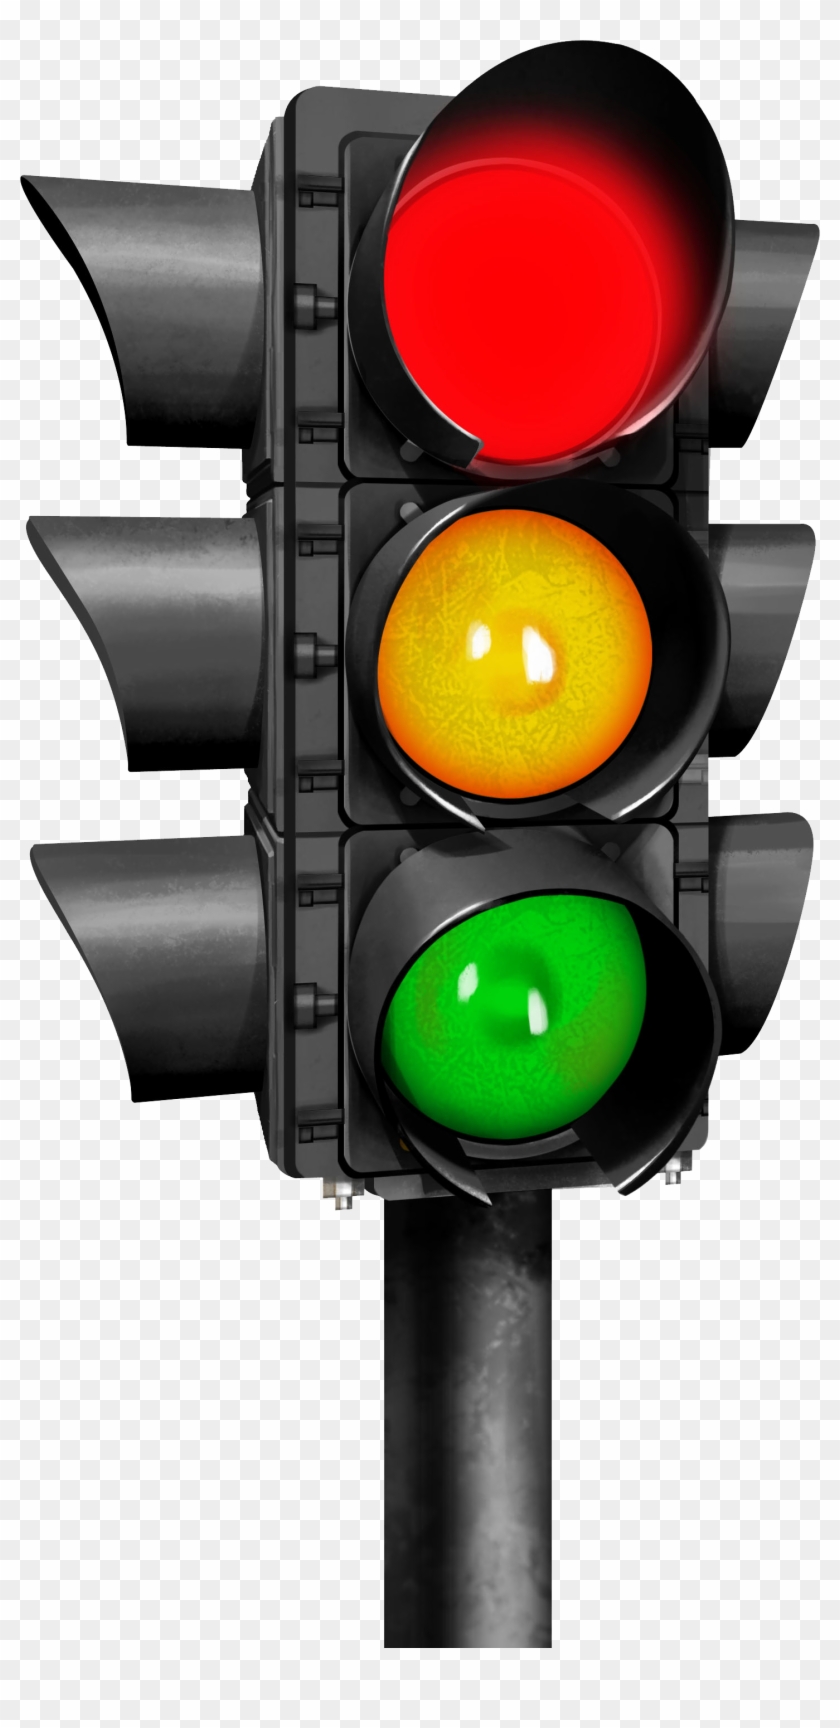 Traffic Light Png - Traffic Light Transparent Background Clipart #797688